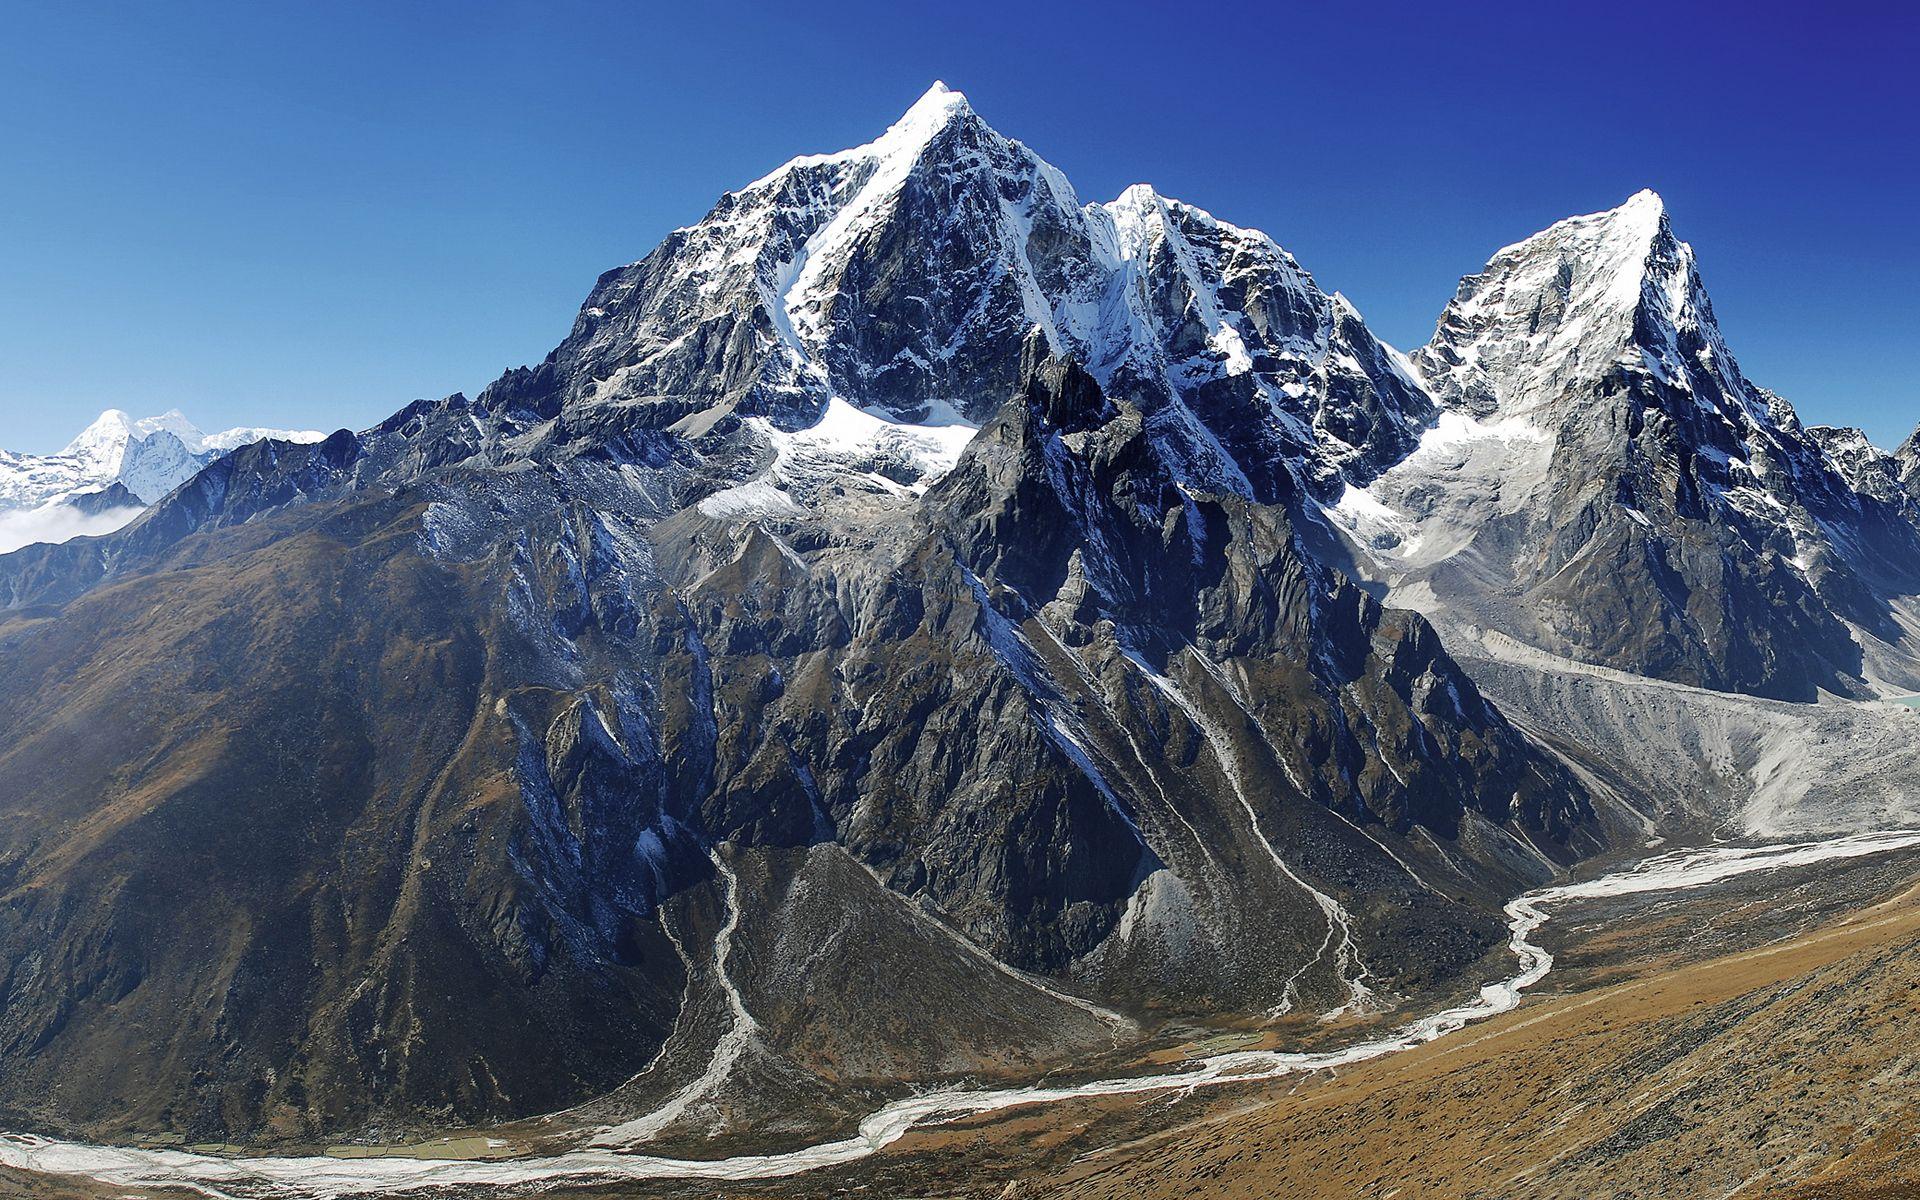 HD Himalaya Wallpaper, High Quality Himalaya Wallpaper for Free, Image